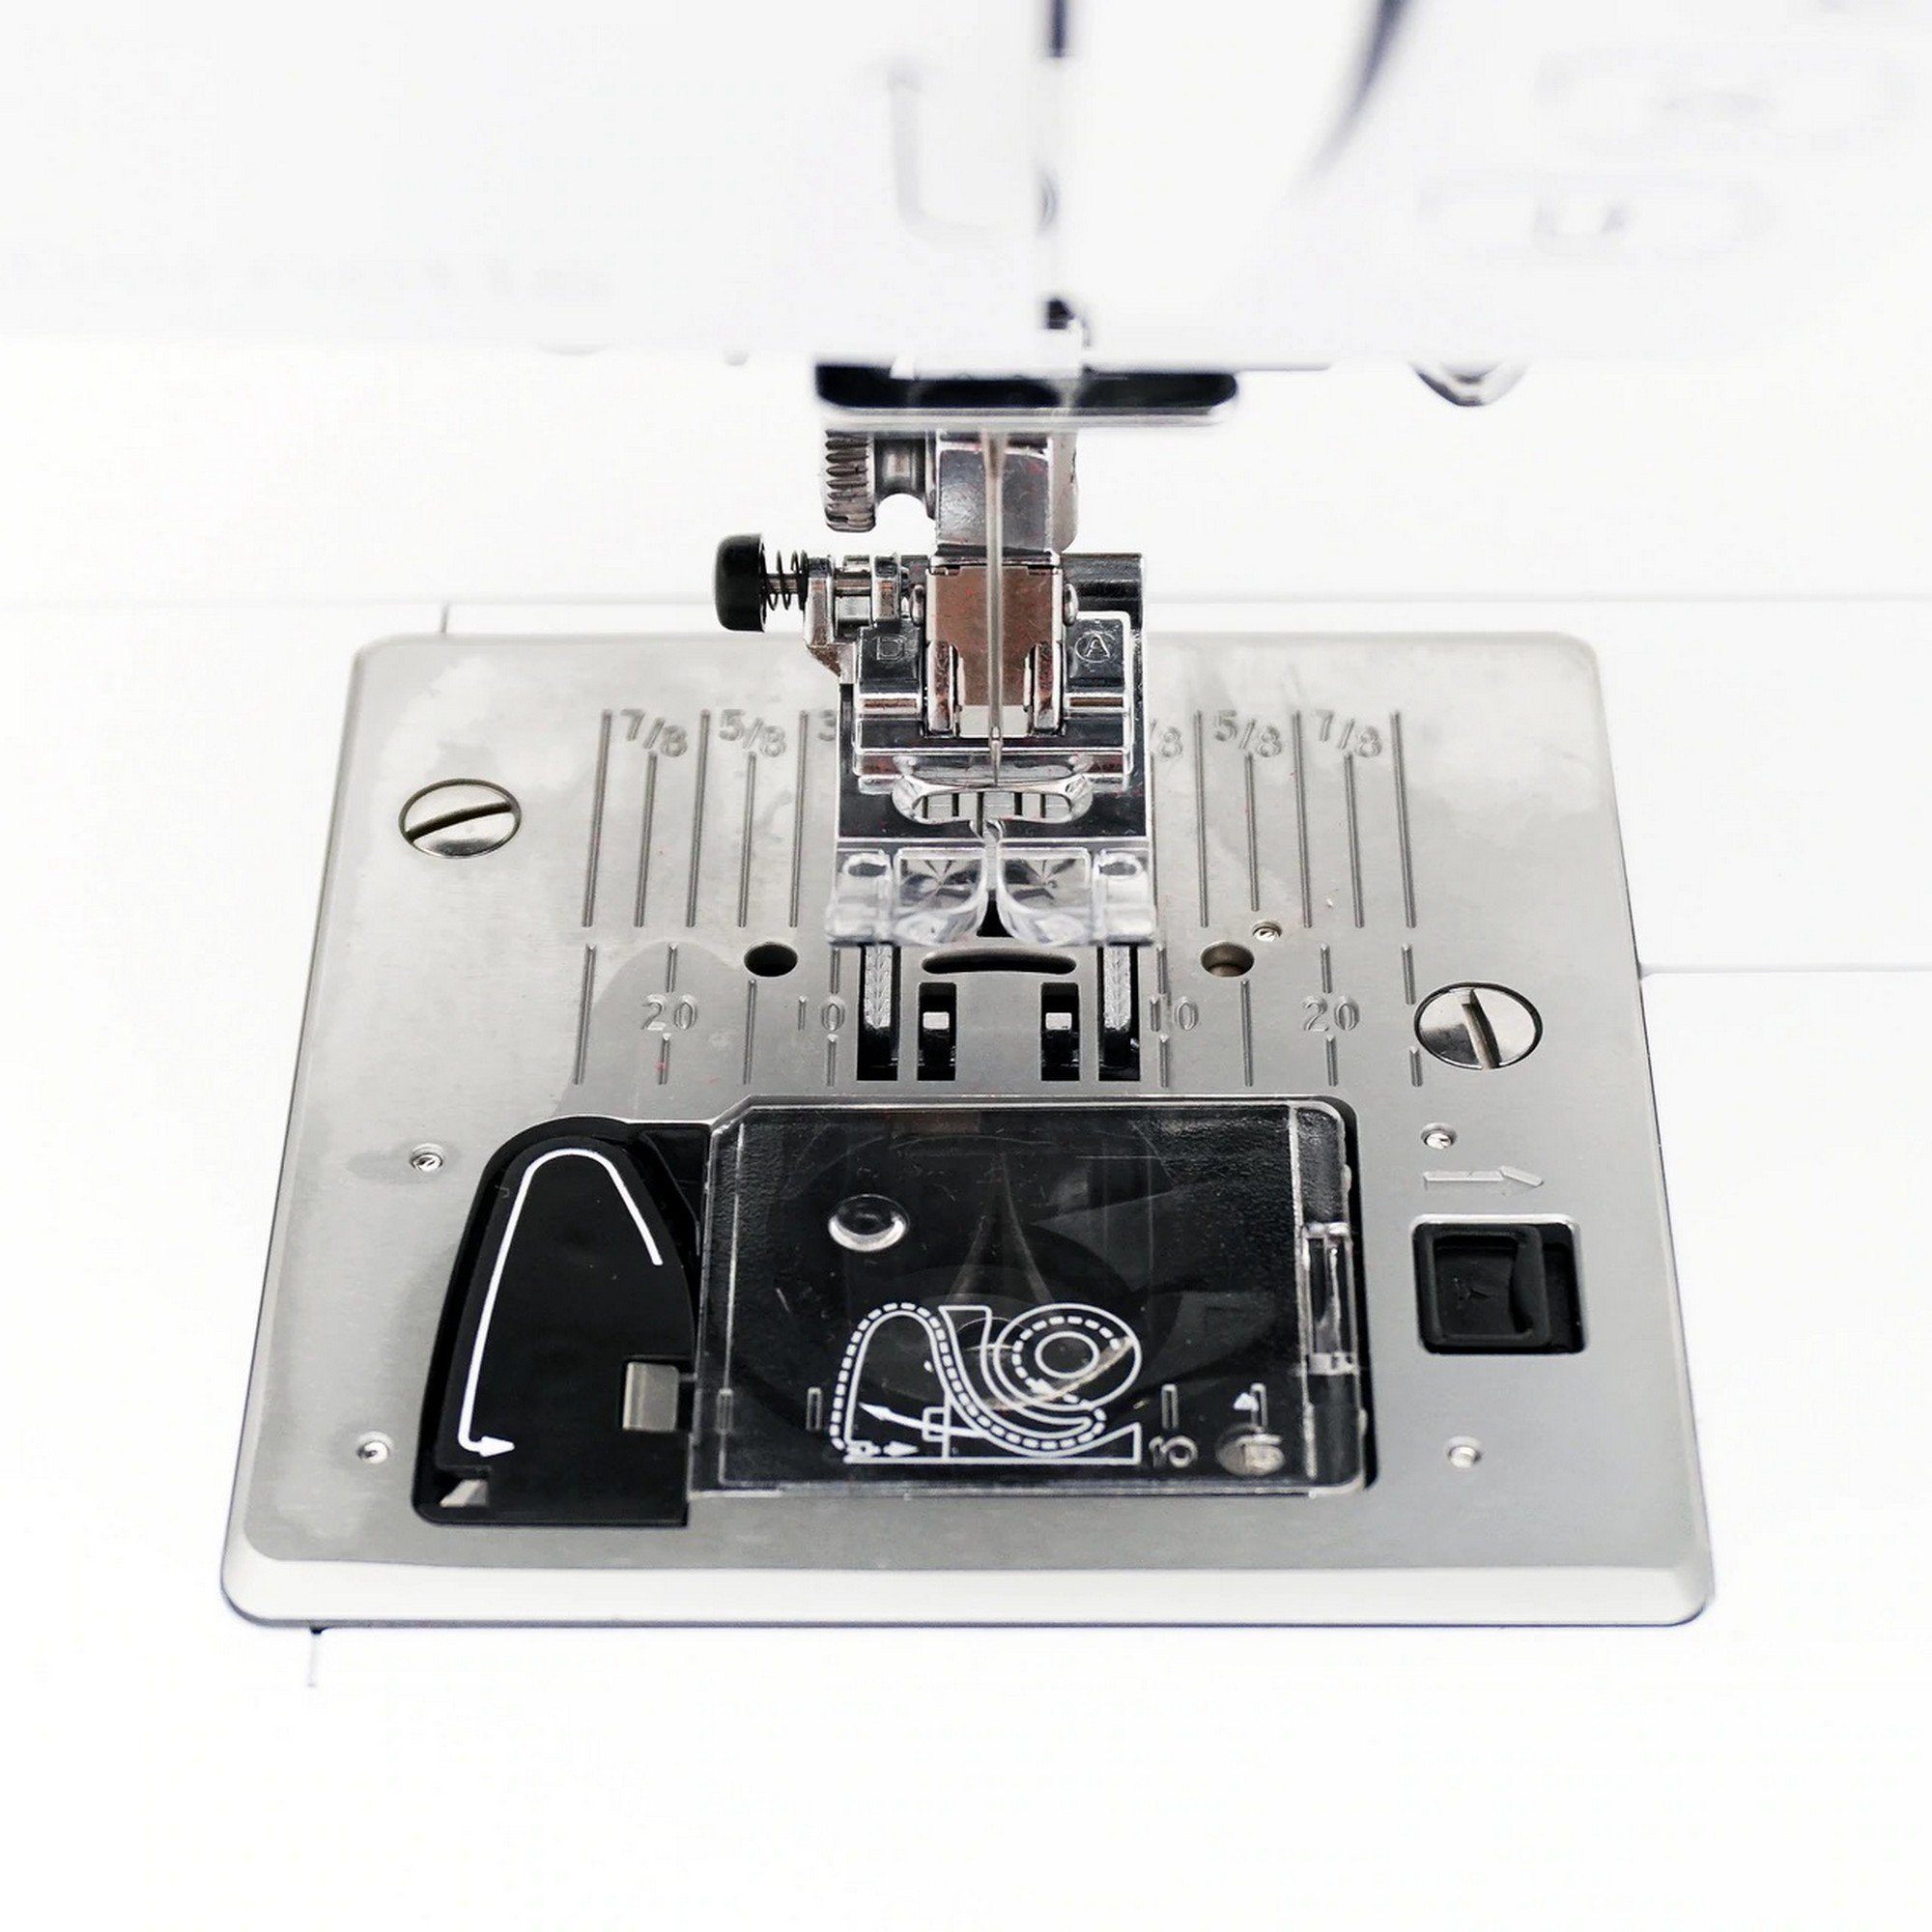 Bernette b77 Computerized Sewing Machine — Quilt Beginnings